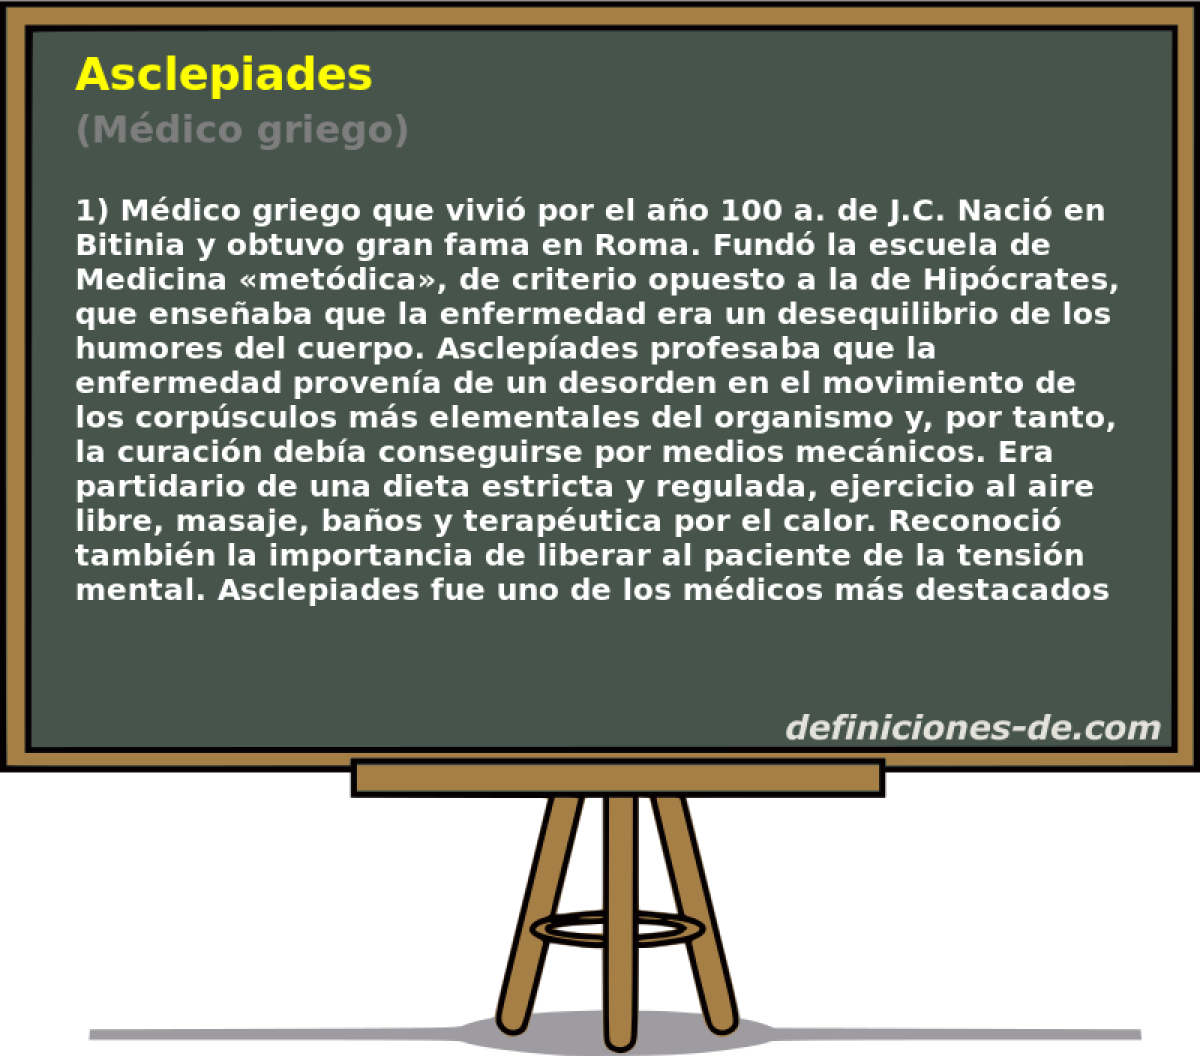 Asclepiades (Mdico griego)